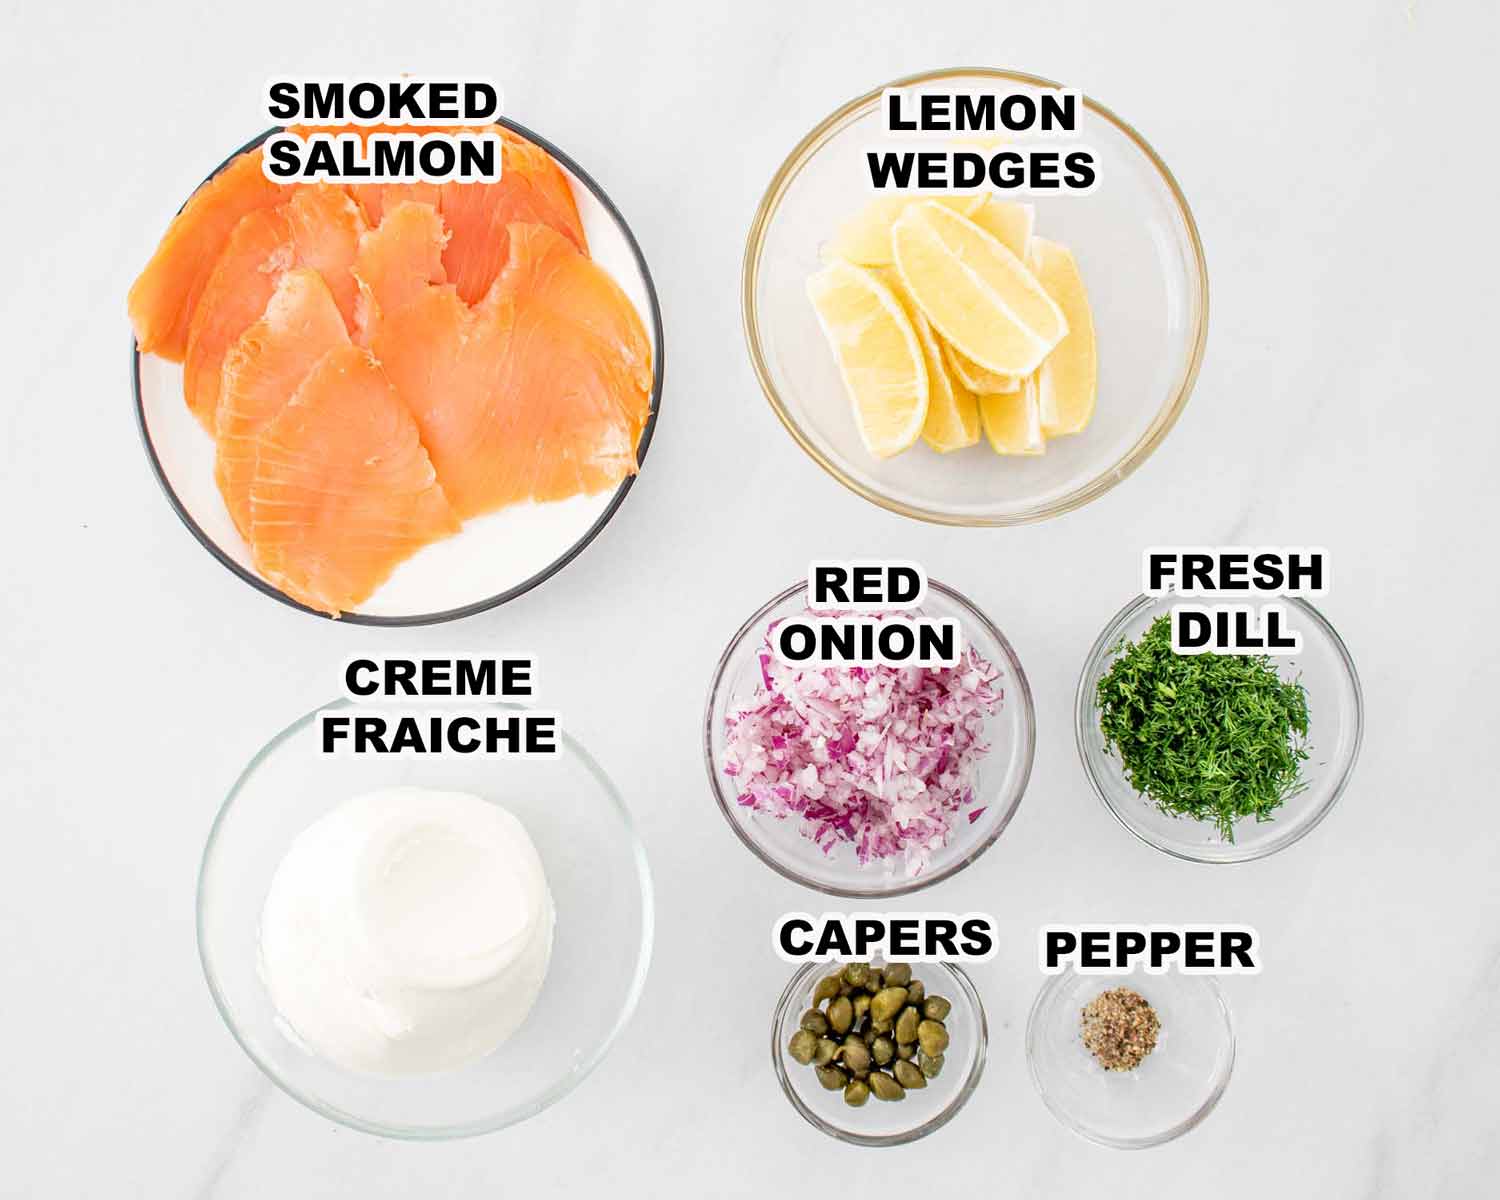 ingredients needed to make smoked salmon blinis.